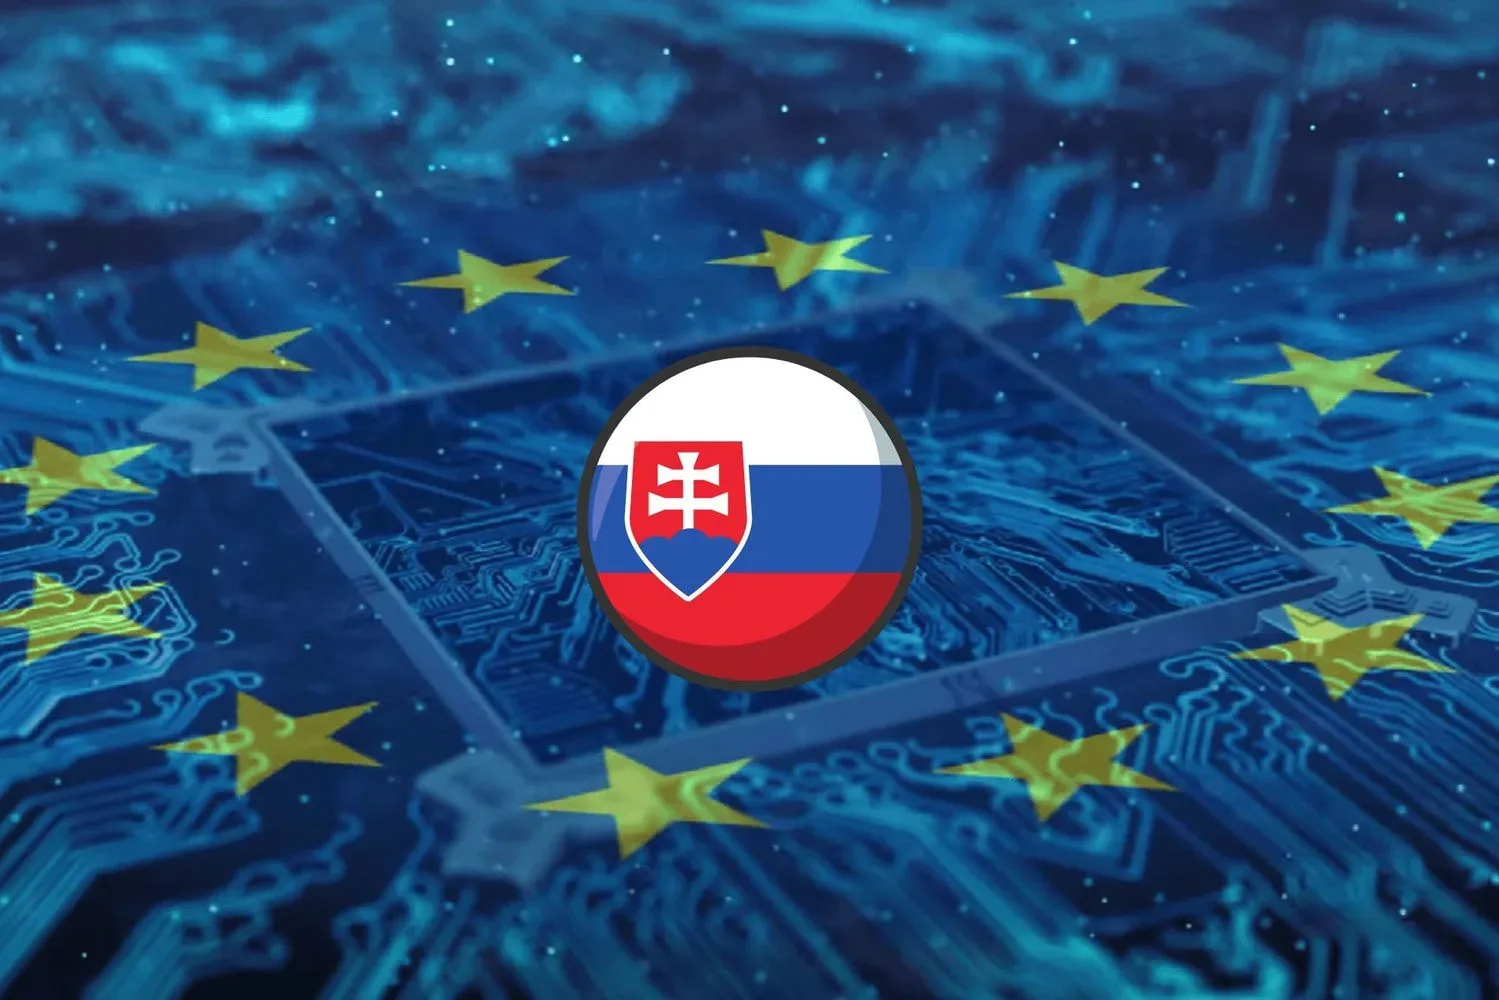 slovensko digital eu jpg webp